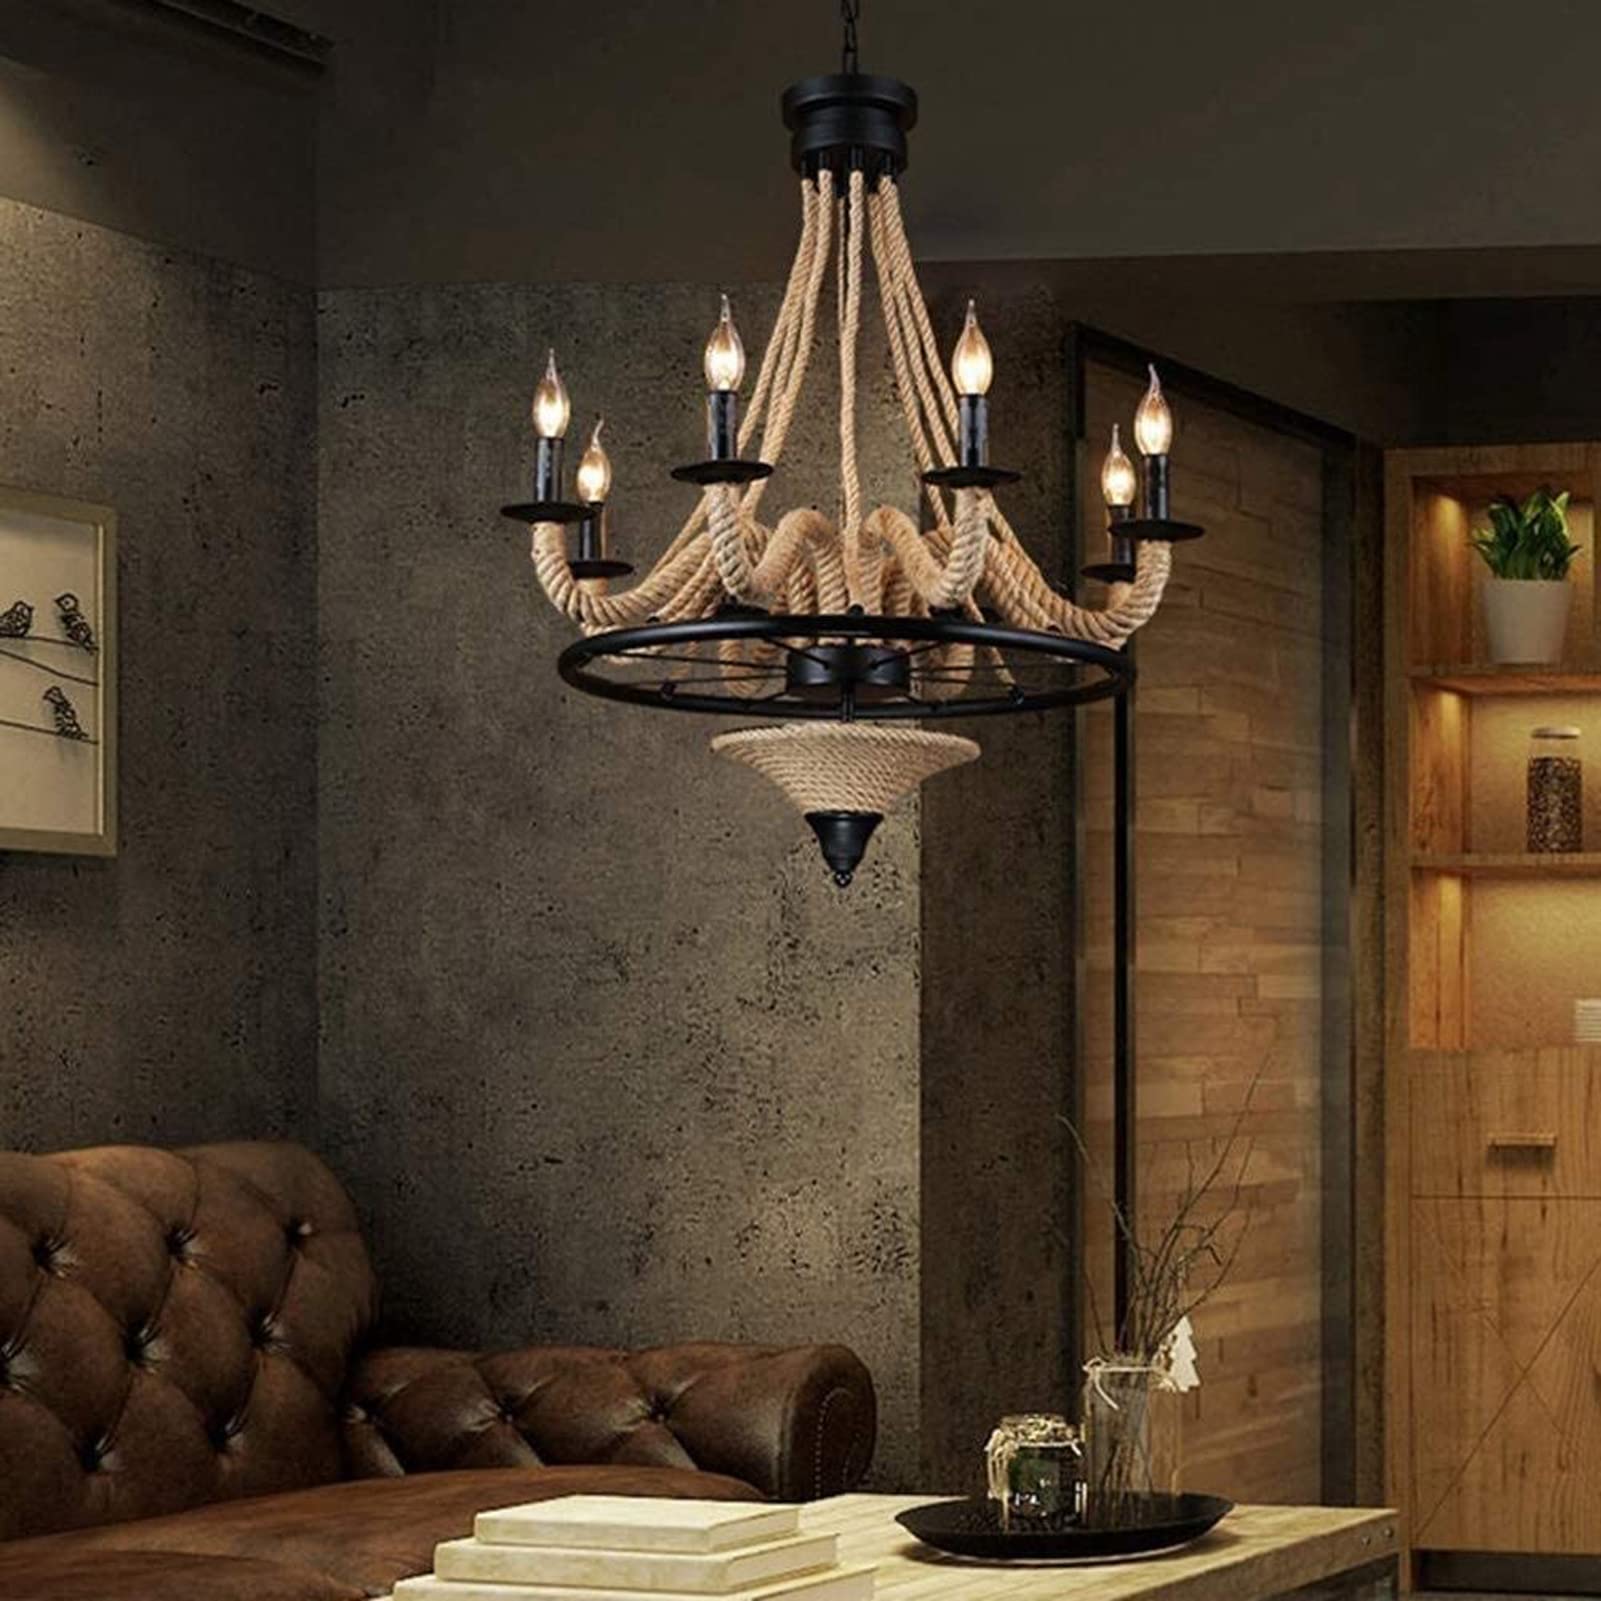 Epoch Antik LED pendant lamp Wood/black Metal/Rope Living room/Bar/Restaurant 